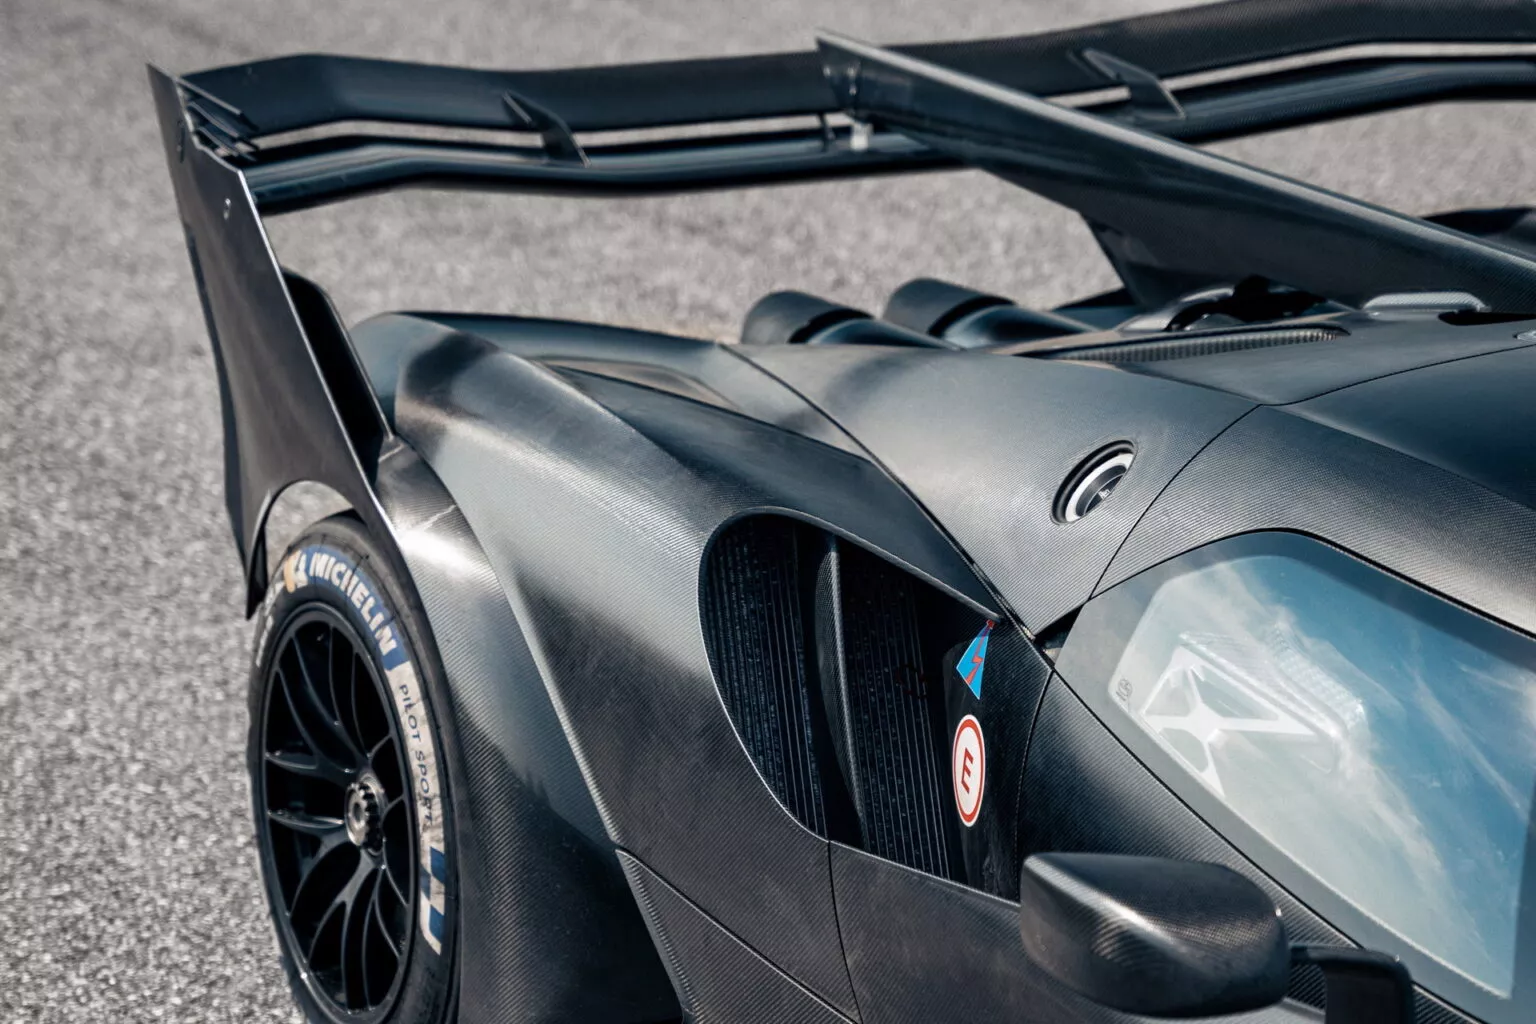 Vista parcial da traseira do Bugatti Bolide